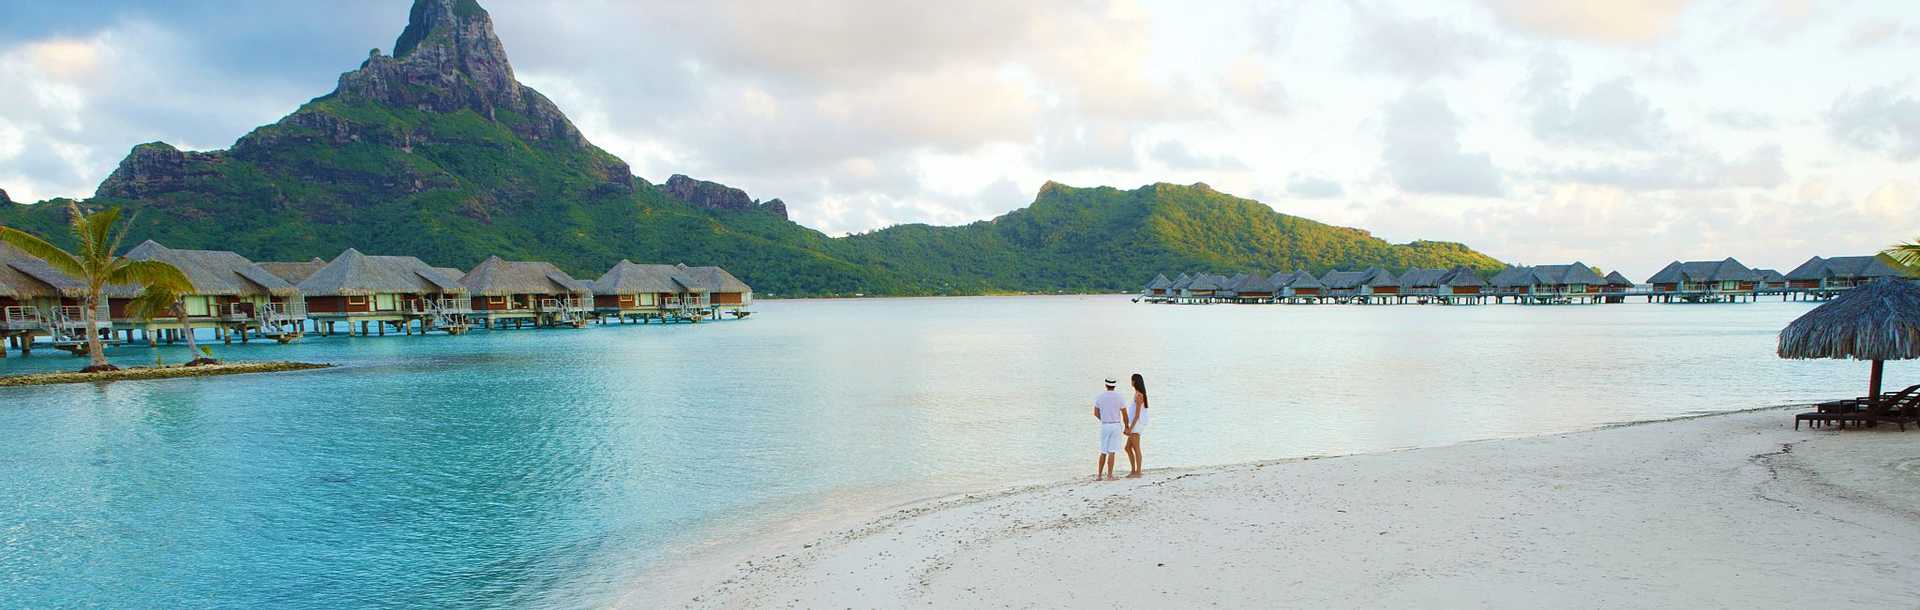 View of Bora Bora bungalows from beach.